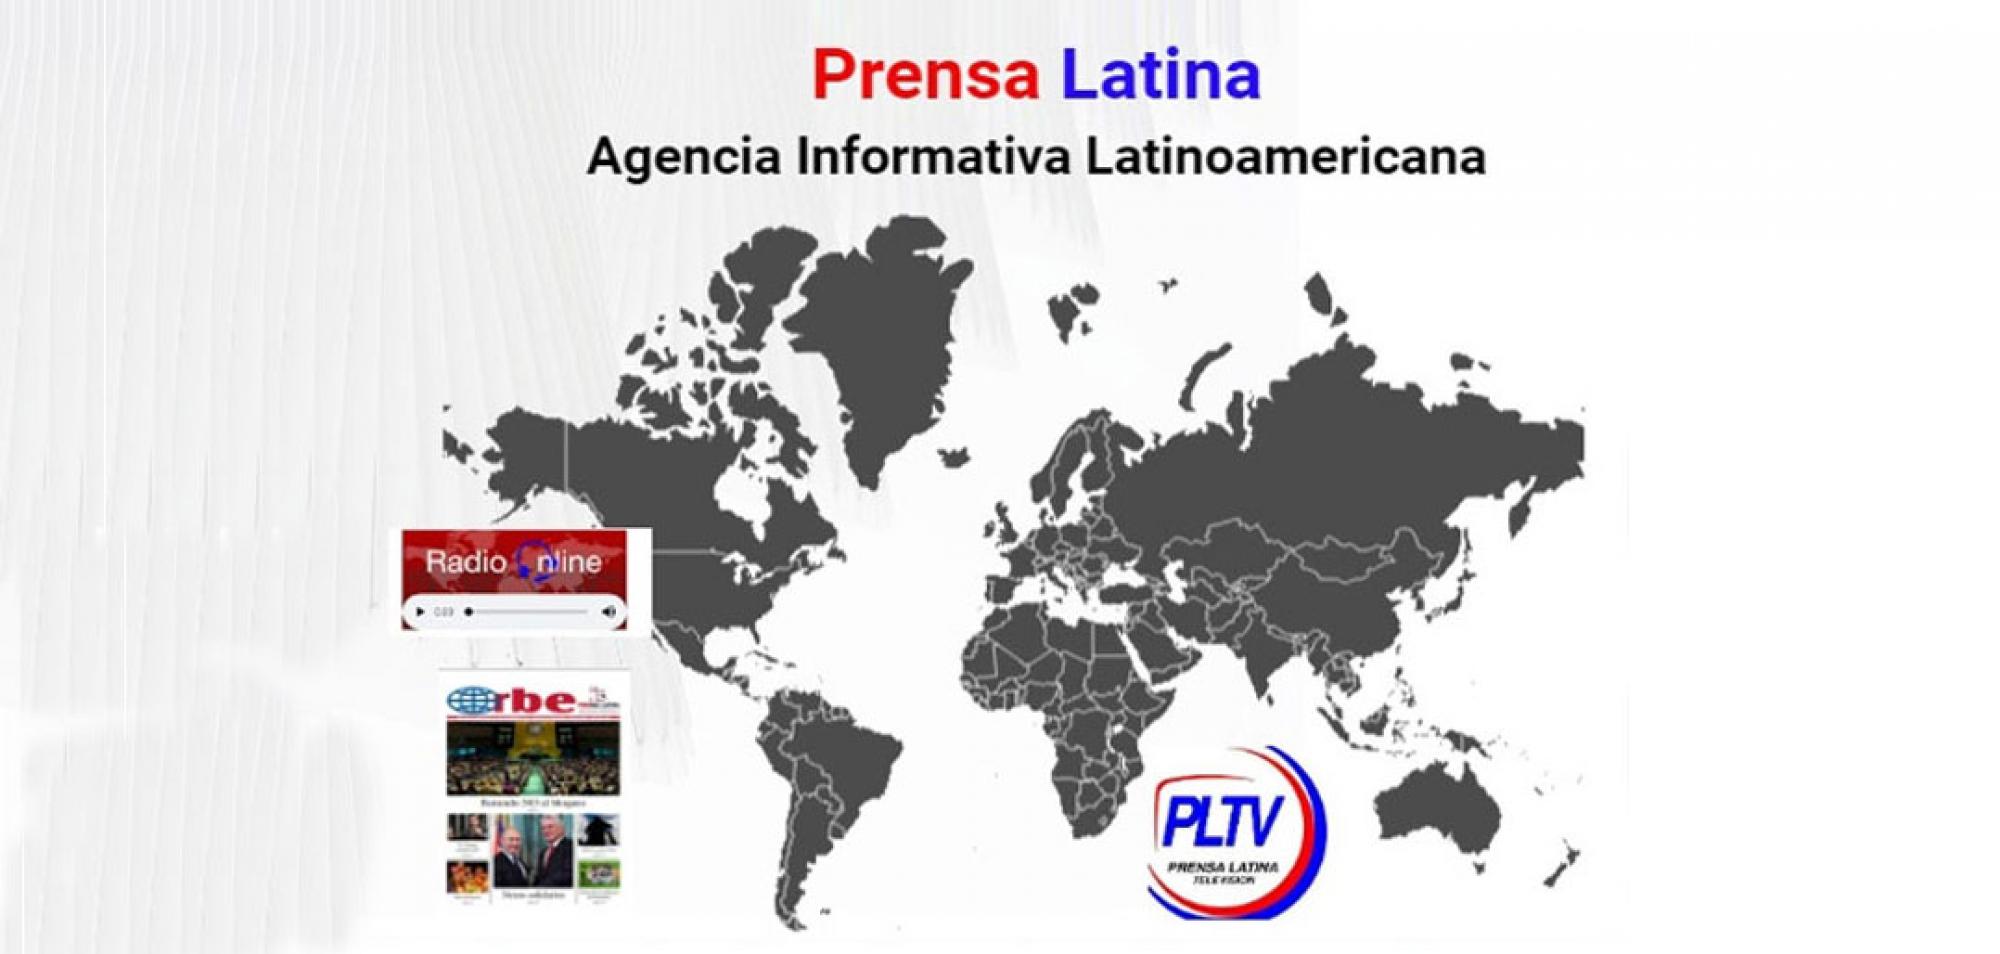 Prensa Latina says: ready, set, go to its annual sports survey